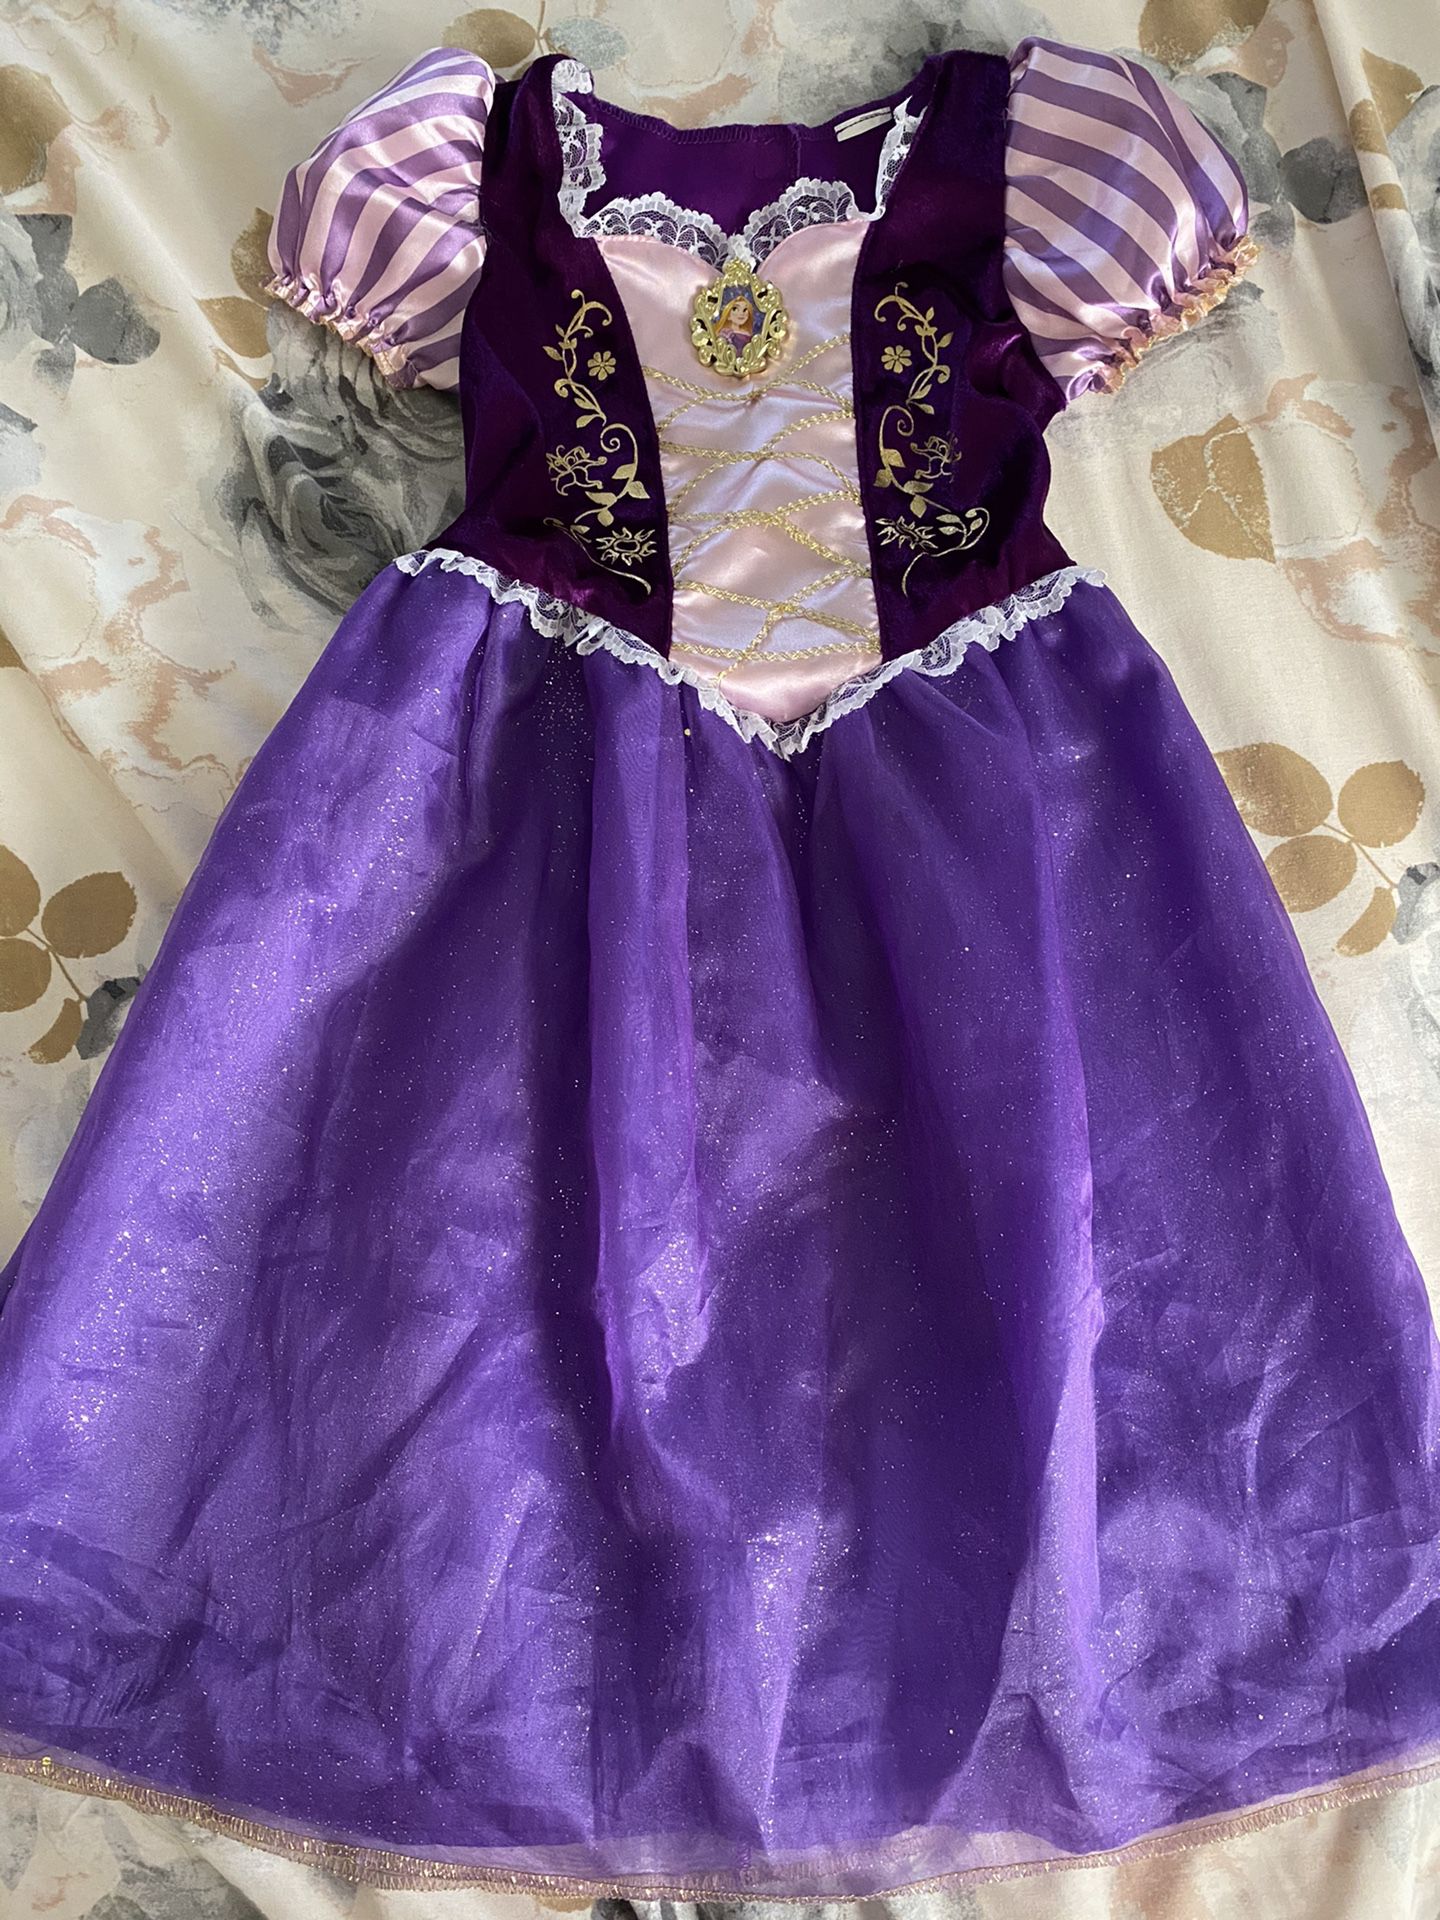 Princess Rapunzel costume